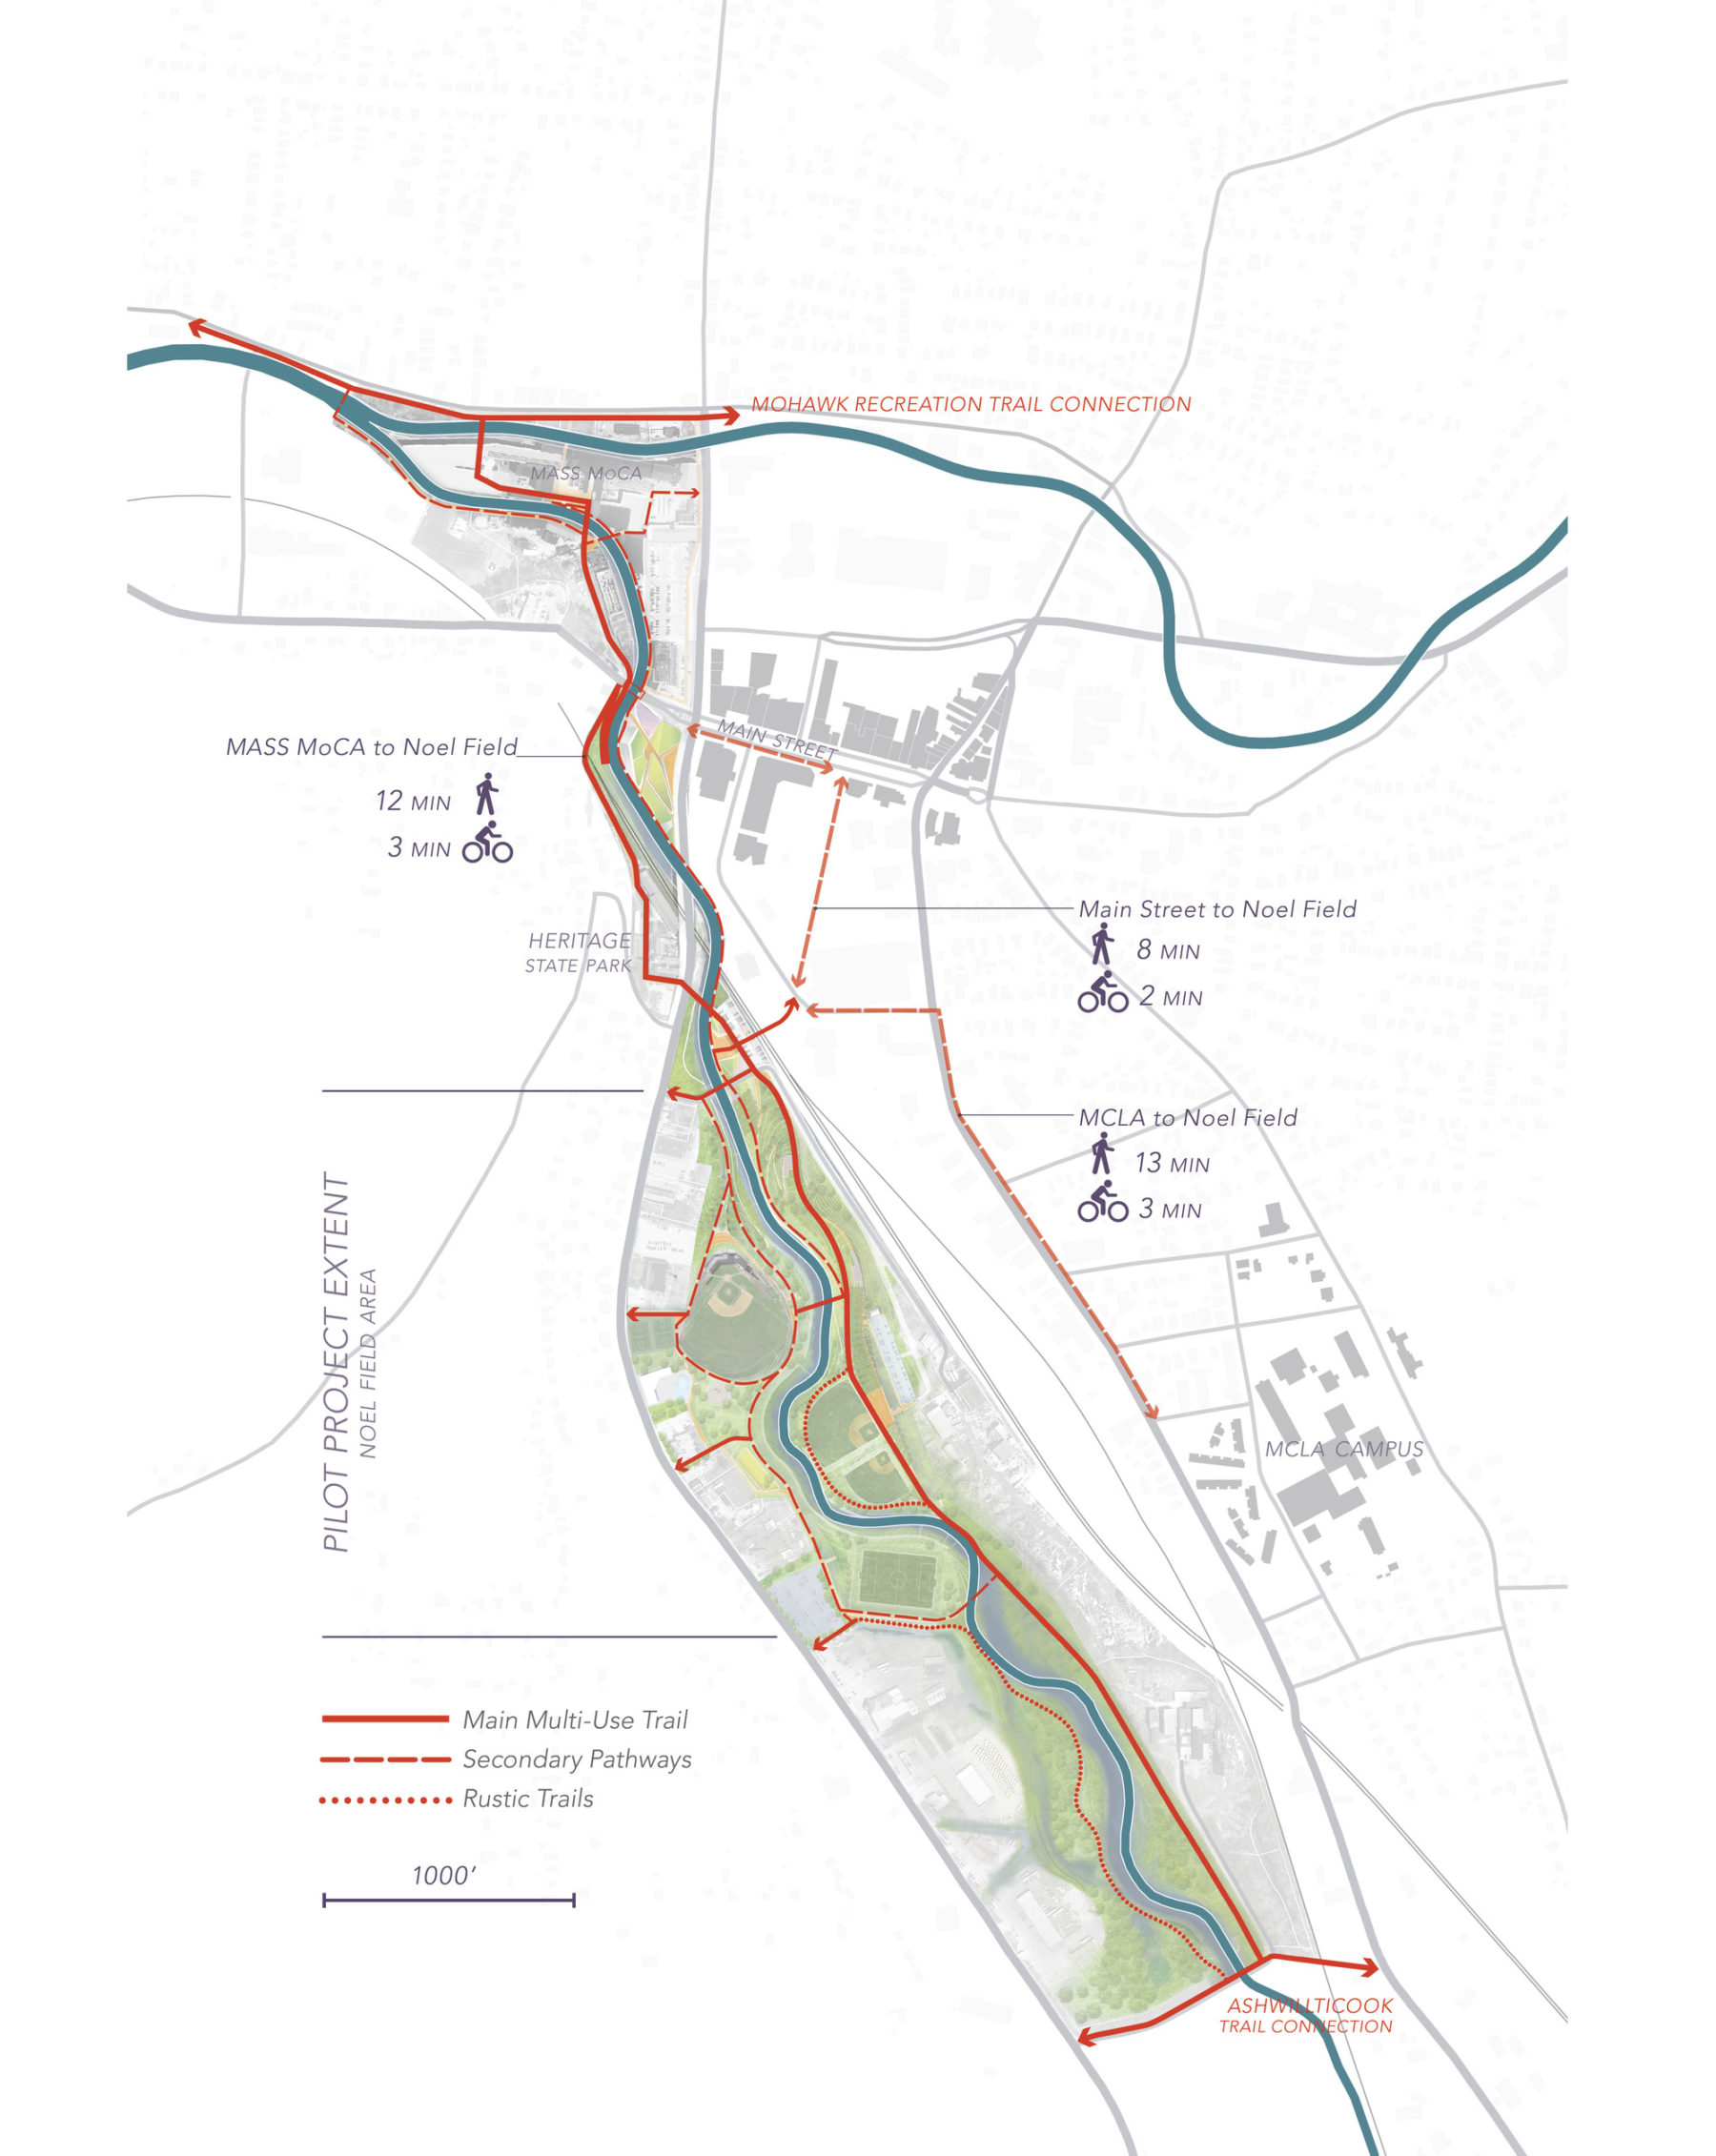 15 Inspirational Riverfront Development Case Studies 193